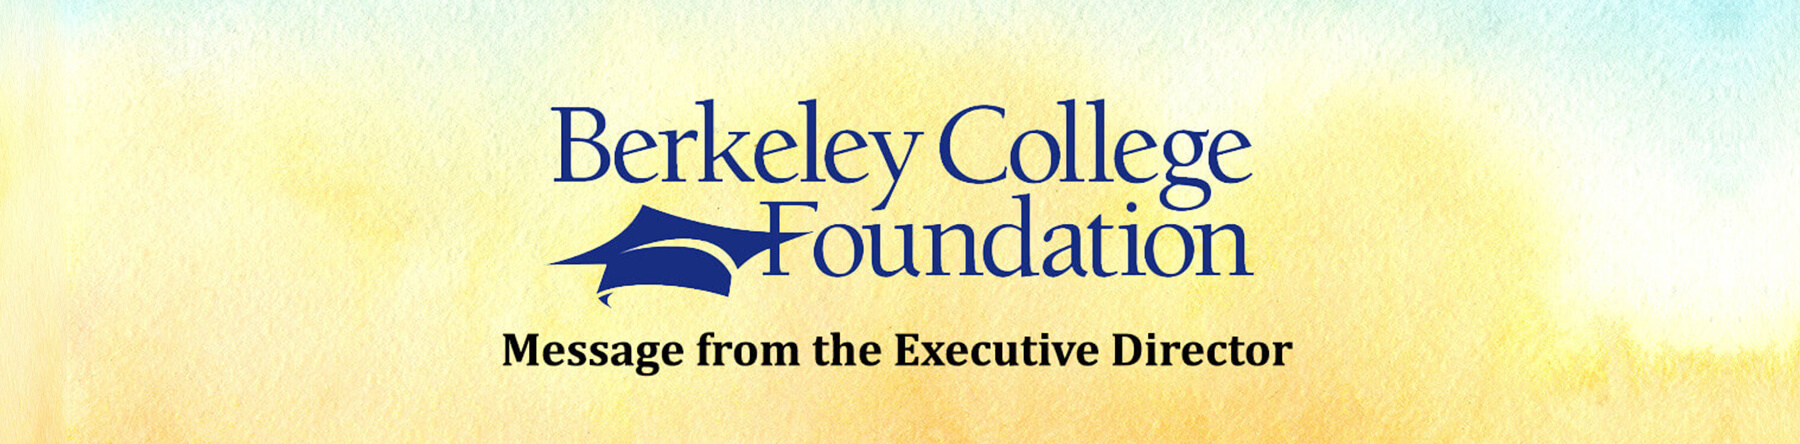 Berkeley College Foundation logo